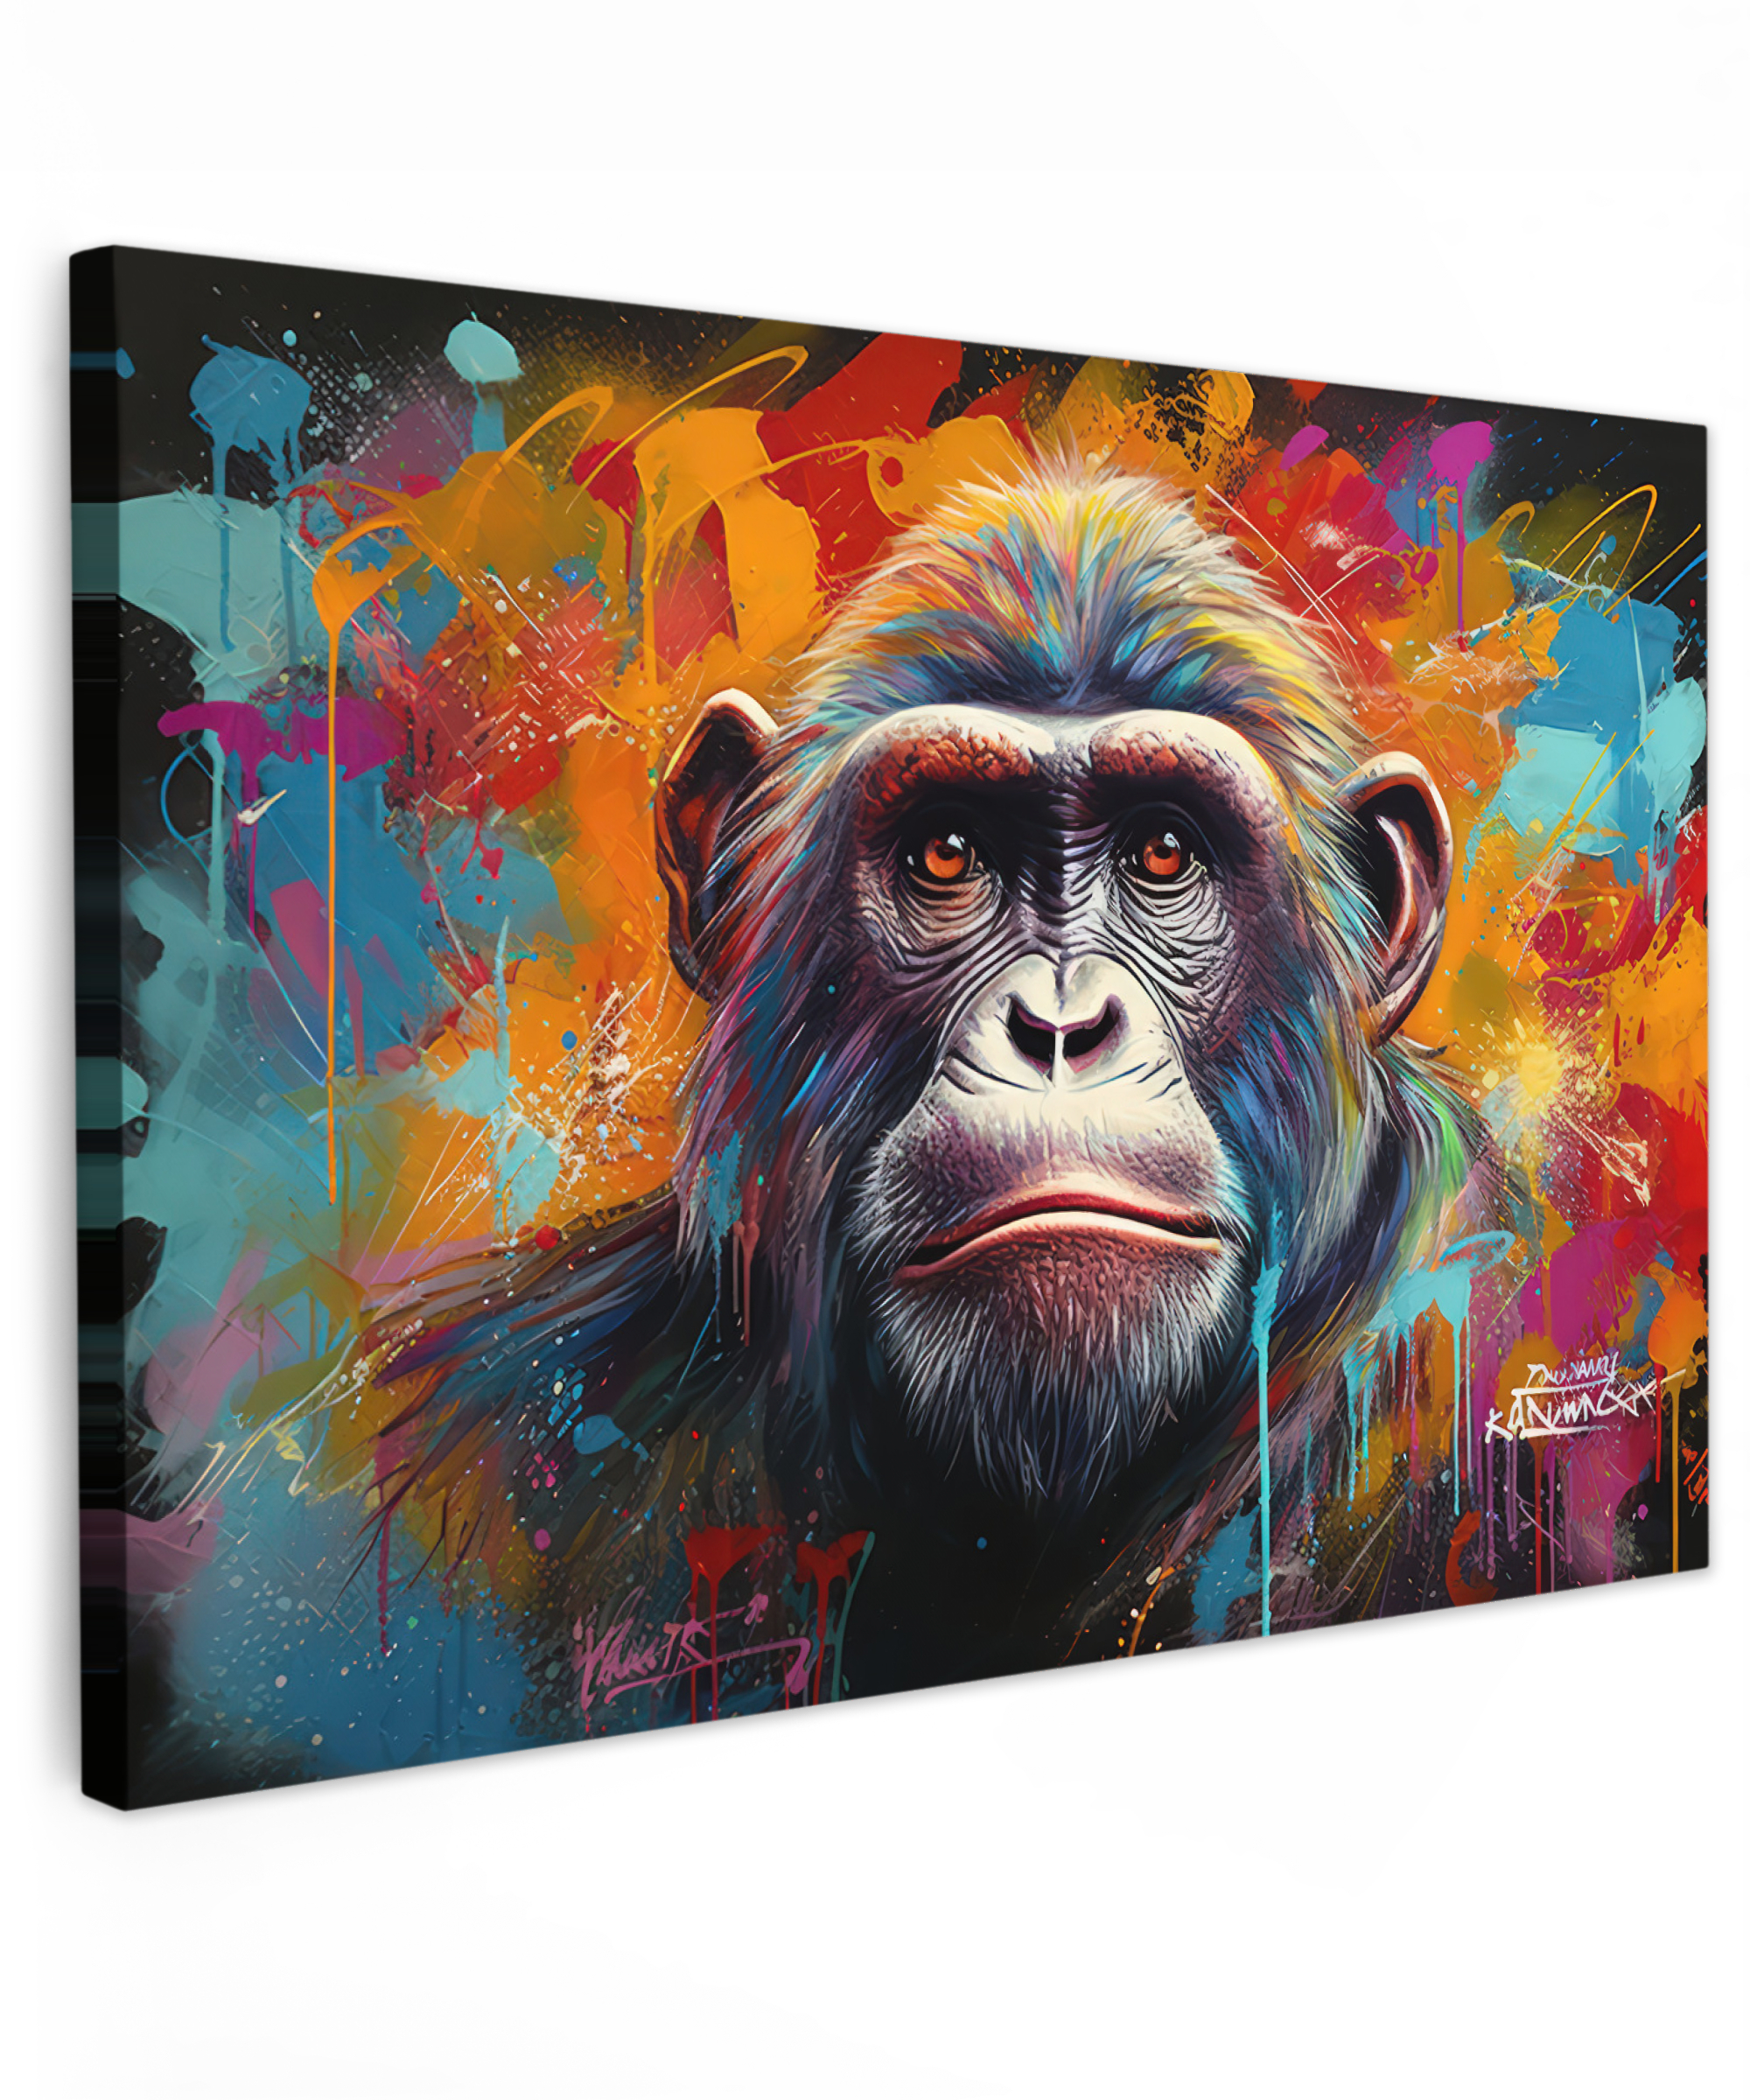 Leinwandbild - Affe - Gorilla - Graffiti - Tiere - Farben